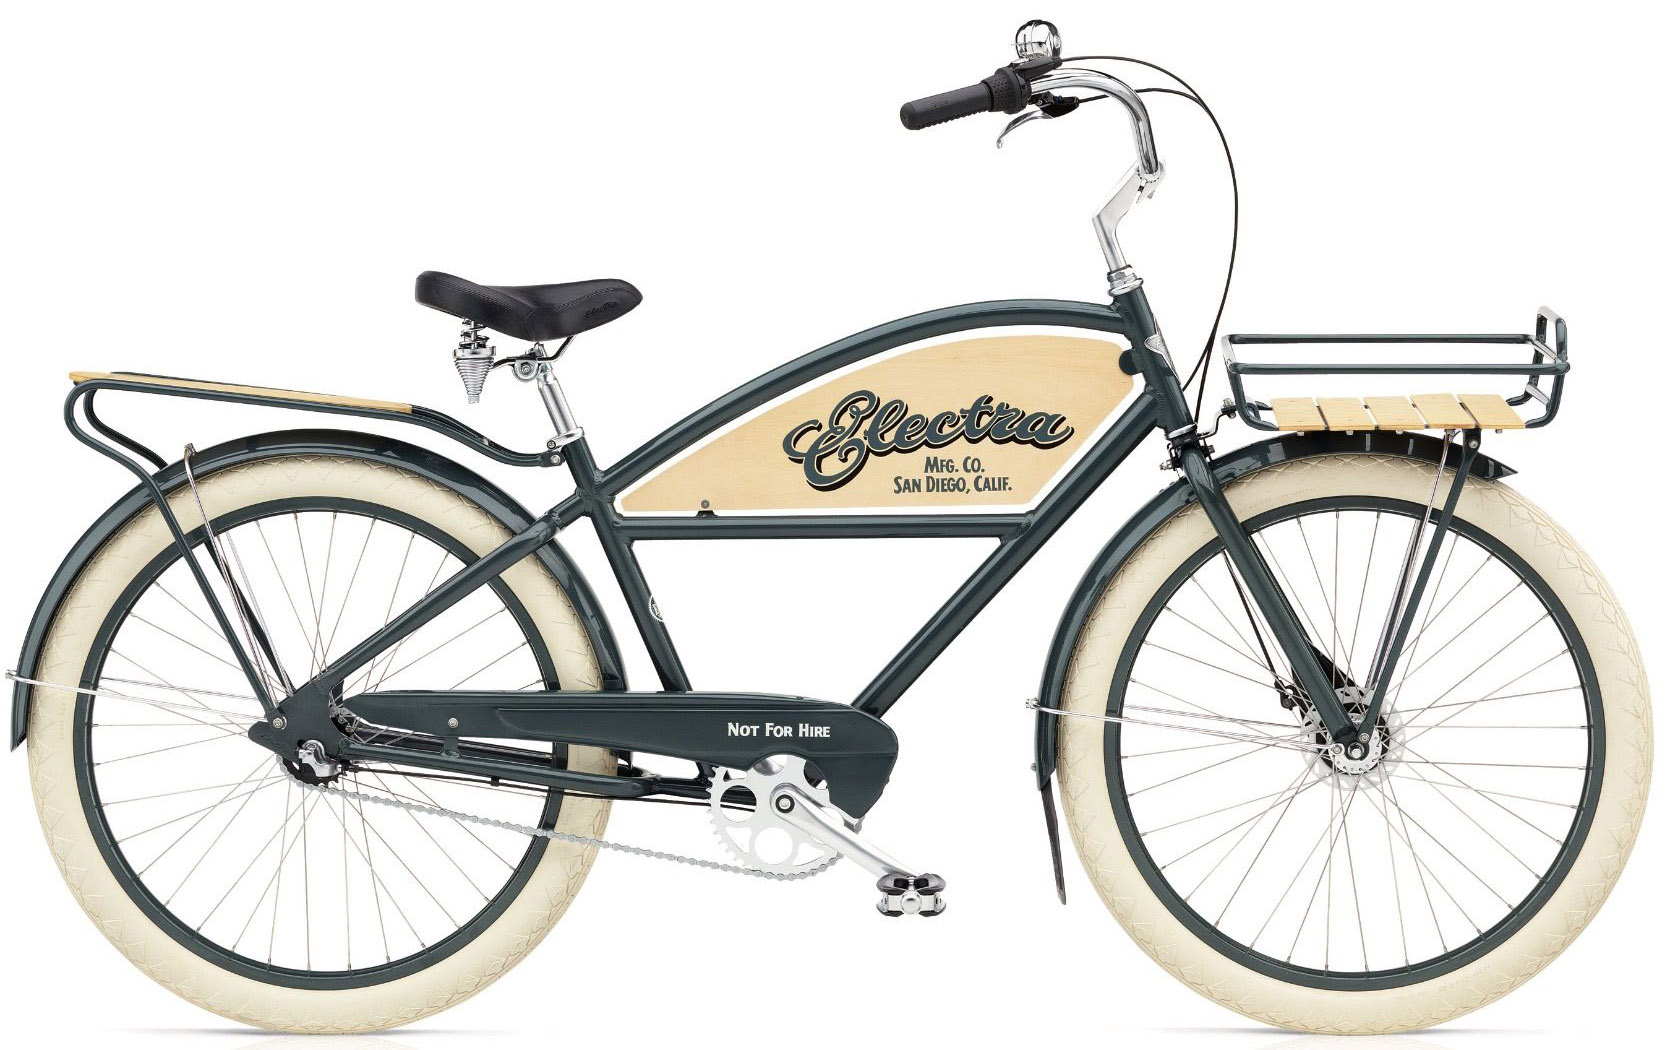  Велосипед Electra Delivery 3i 2020